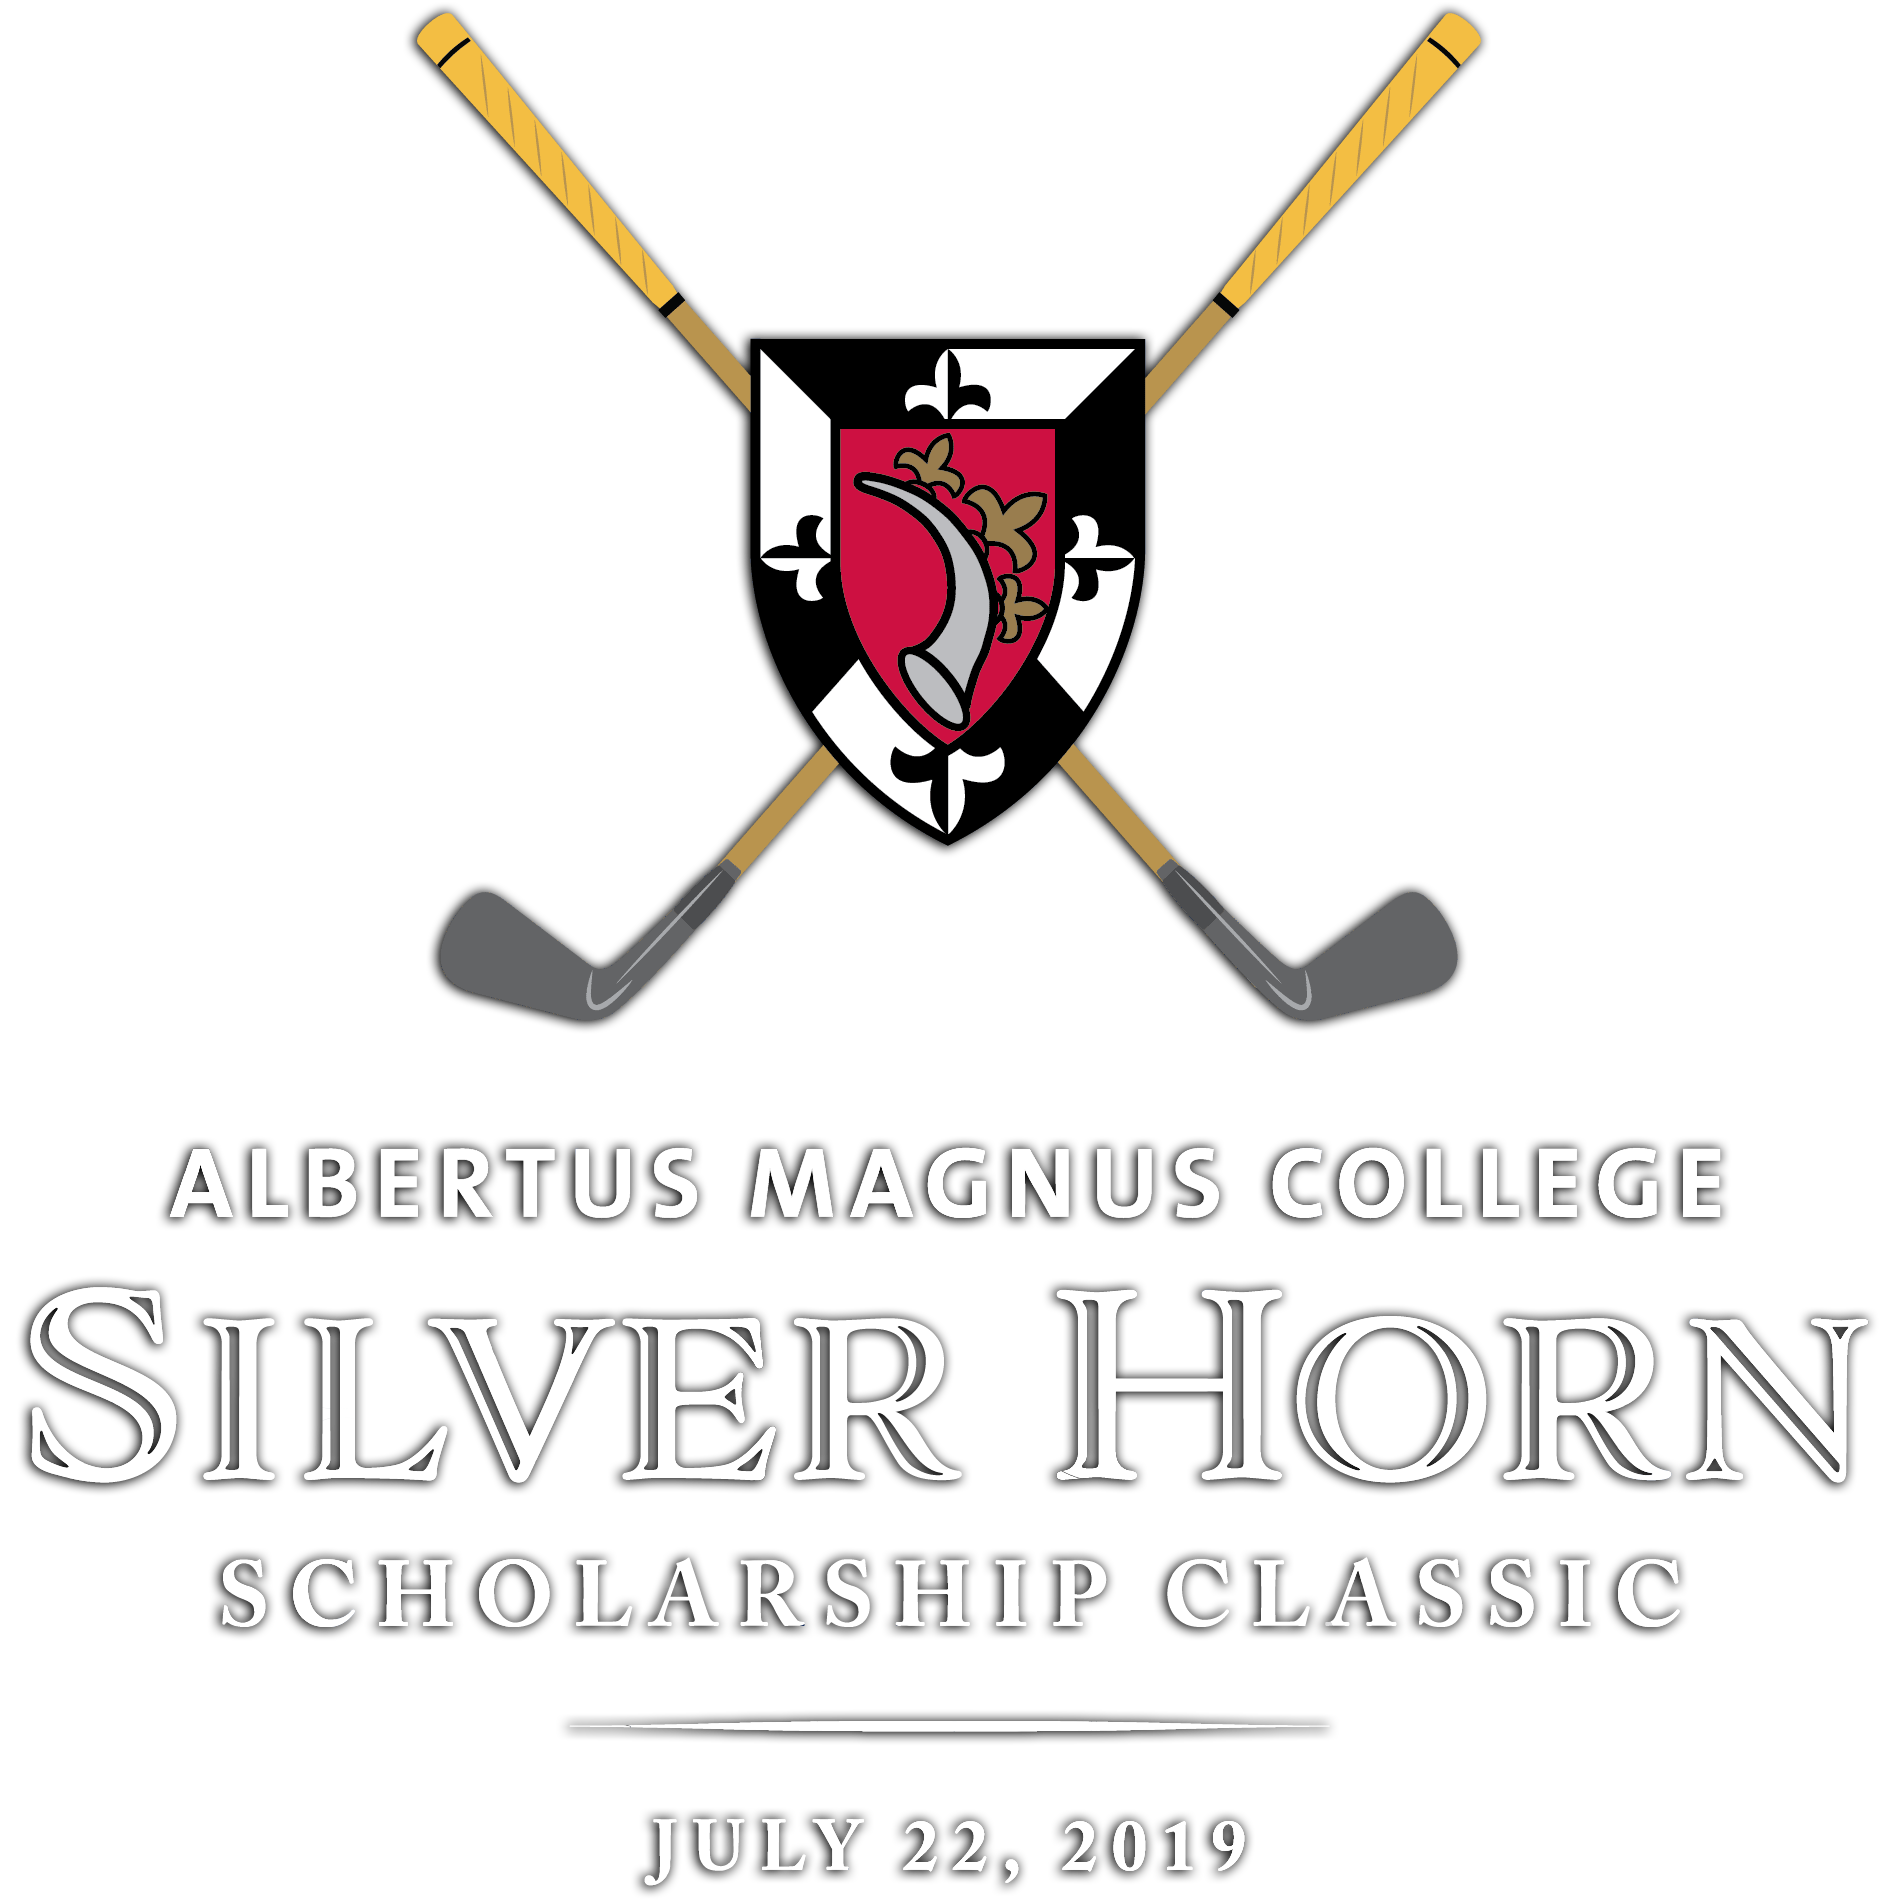 Silver Horn Classic Golf Tournament Logo with Albertus Magnus College